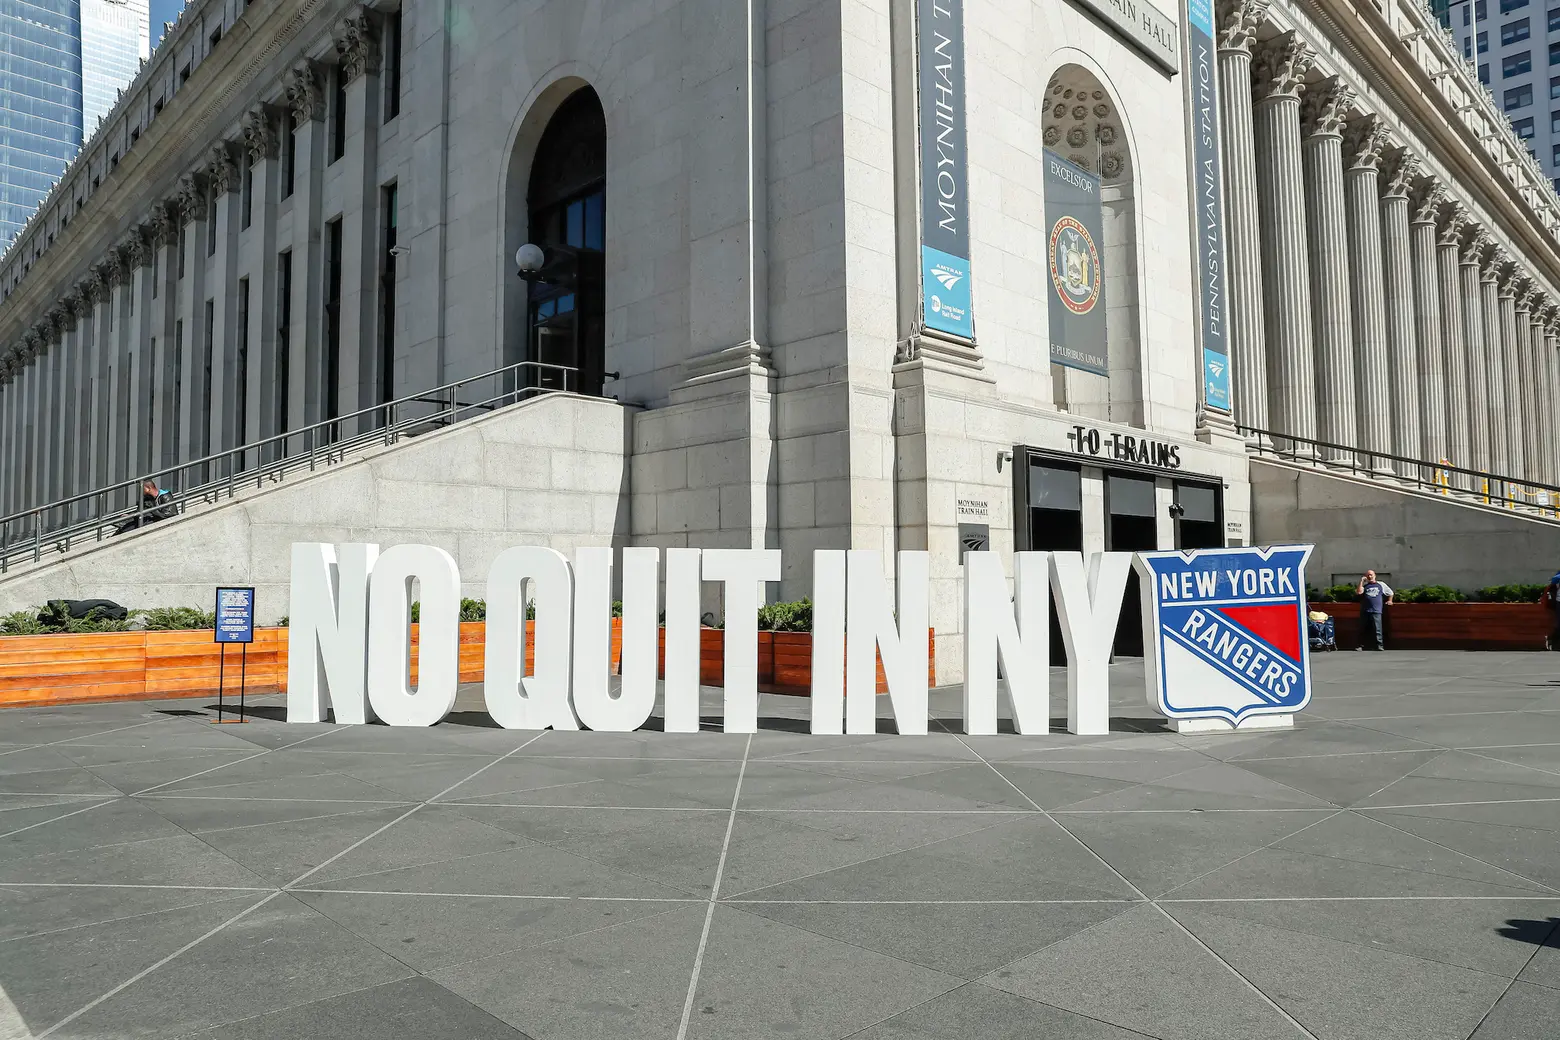 New York Rangers on X: No quit in your lockscreen